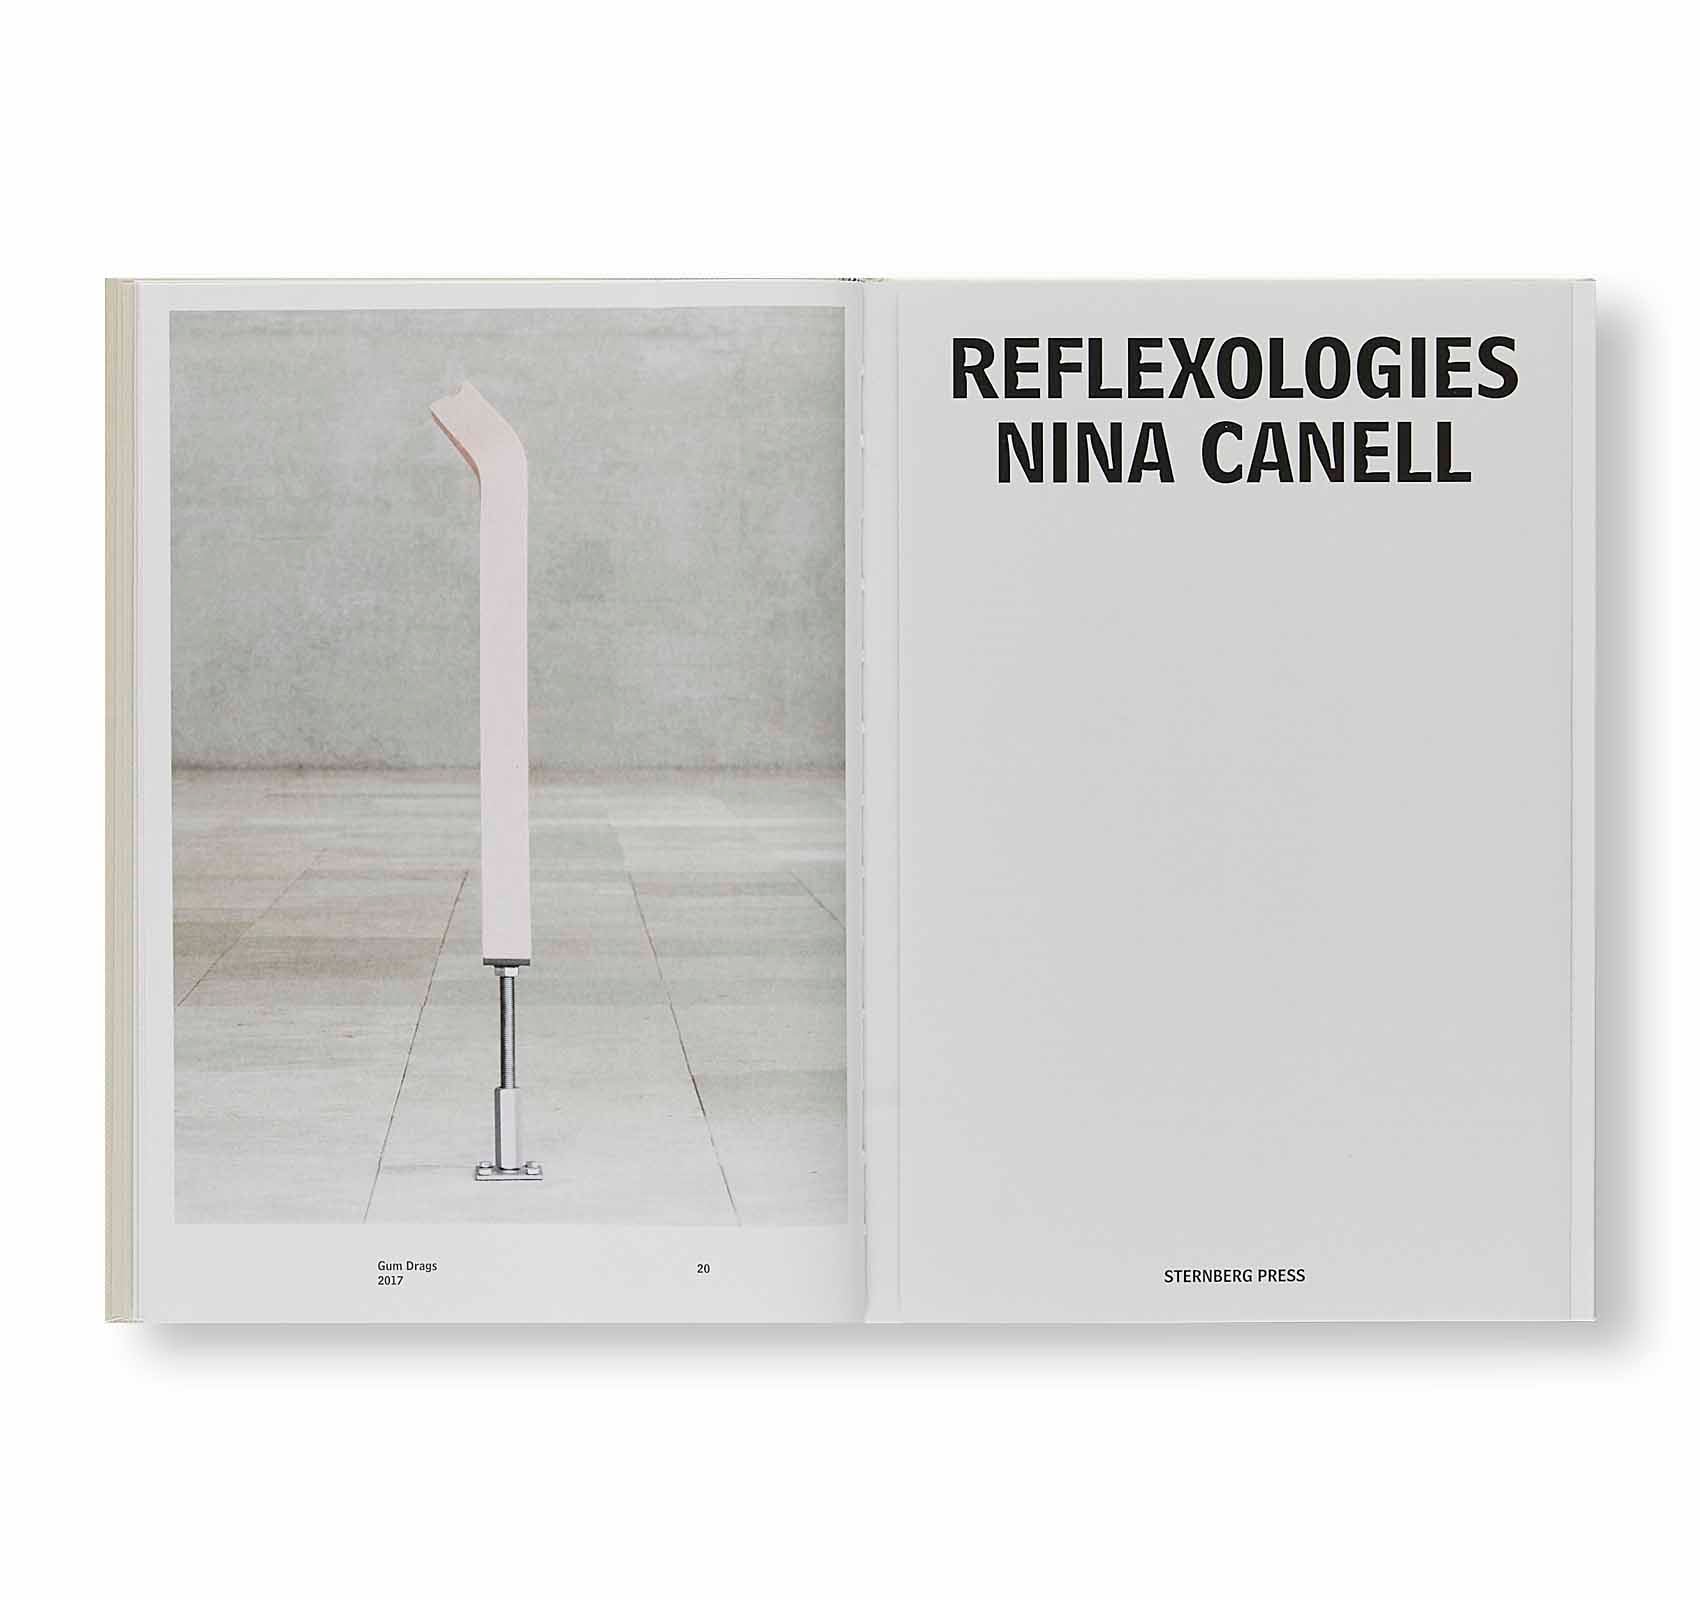 REFLEXOLOGIES by Nina Canell